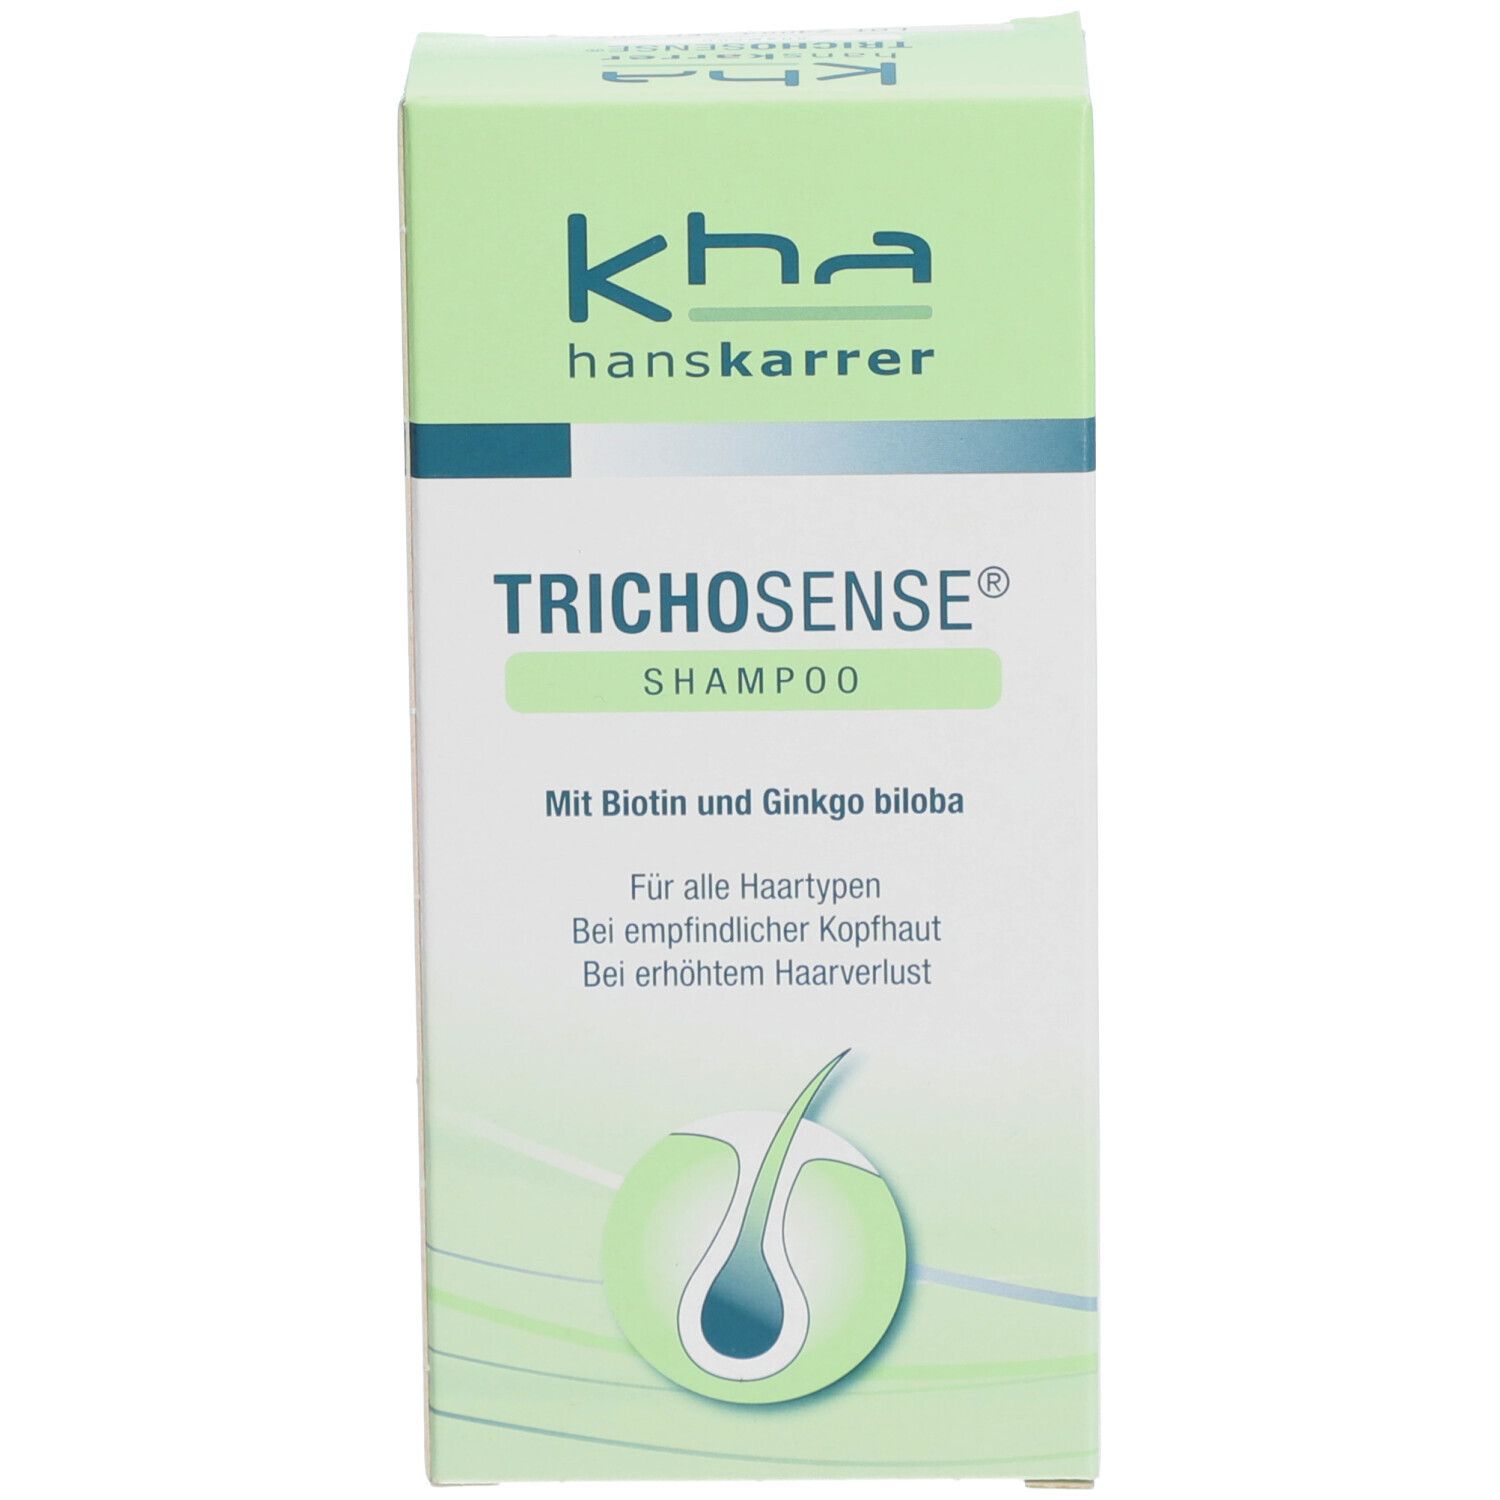 TRICHOSENSE® Shampoo